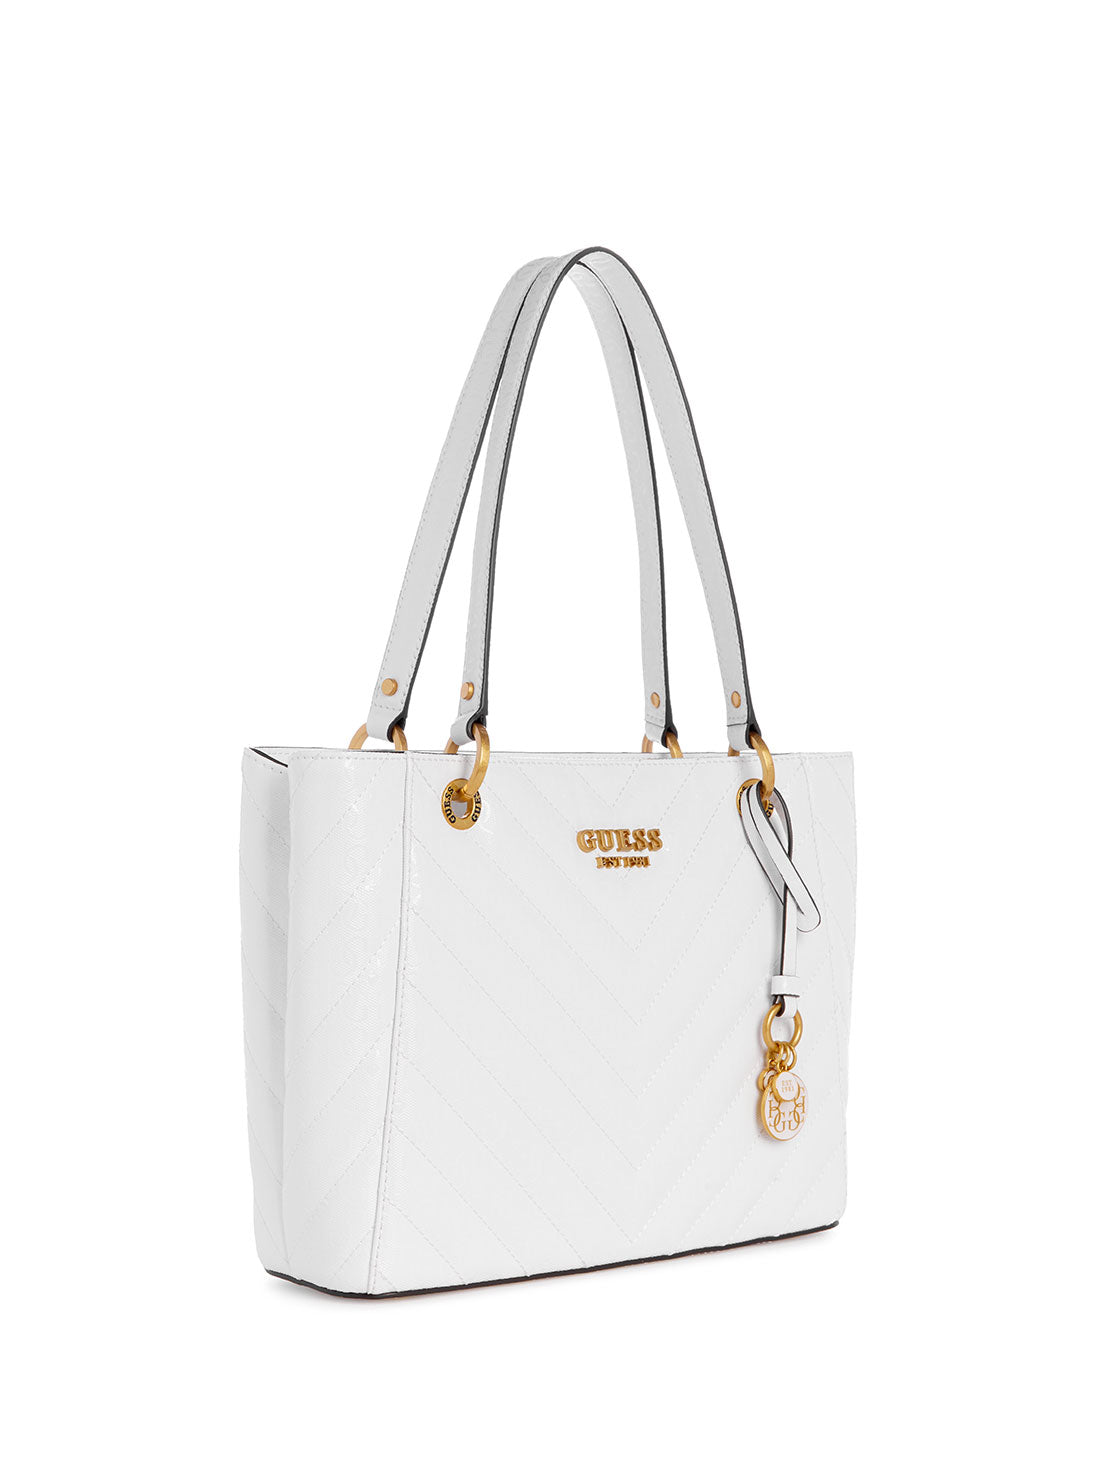 Women's White Jania Small Tote Bag front view alternative